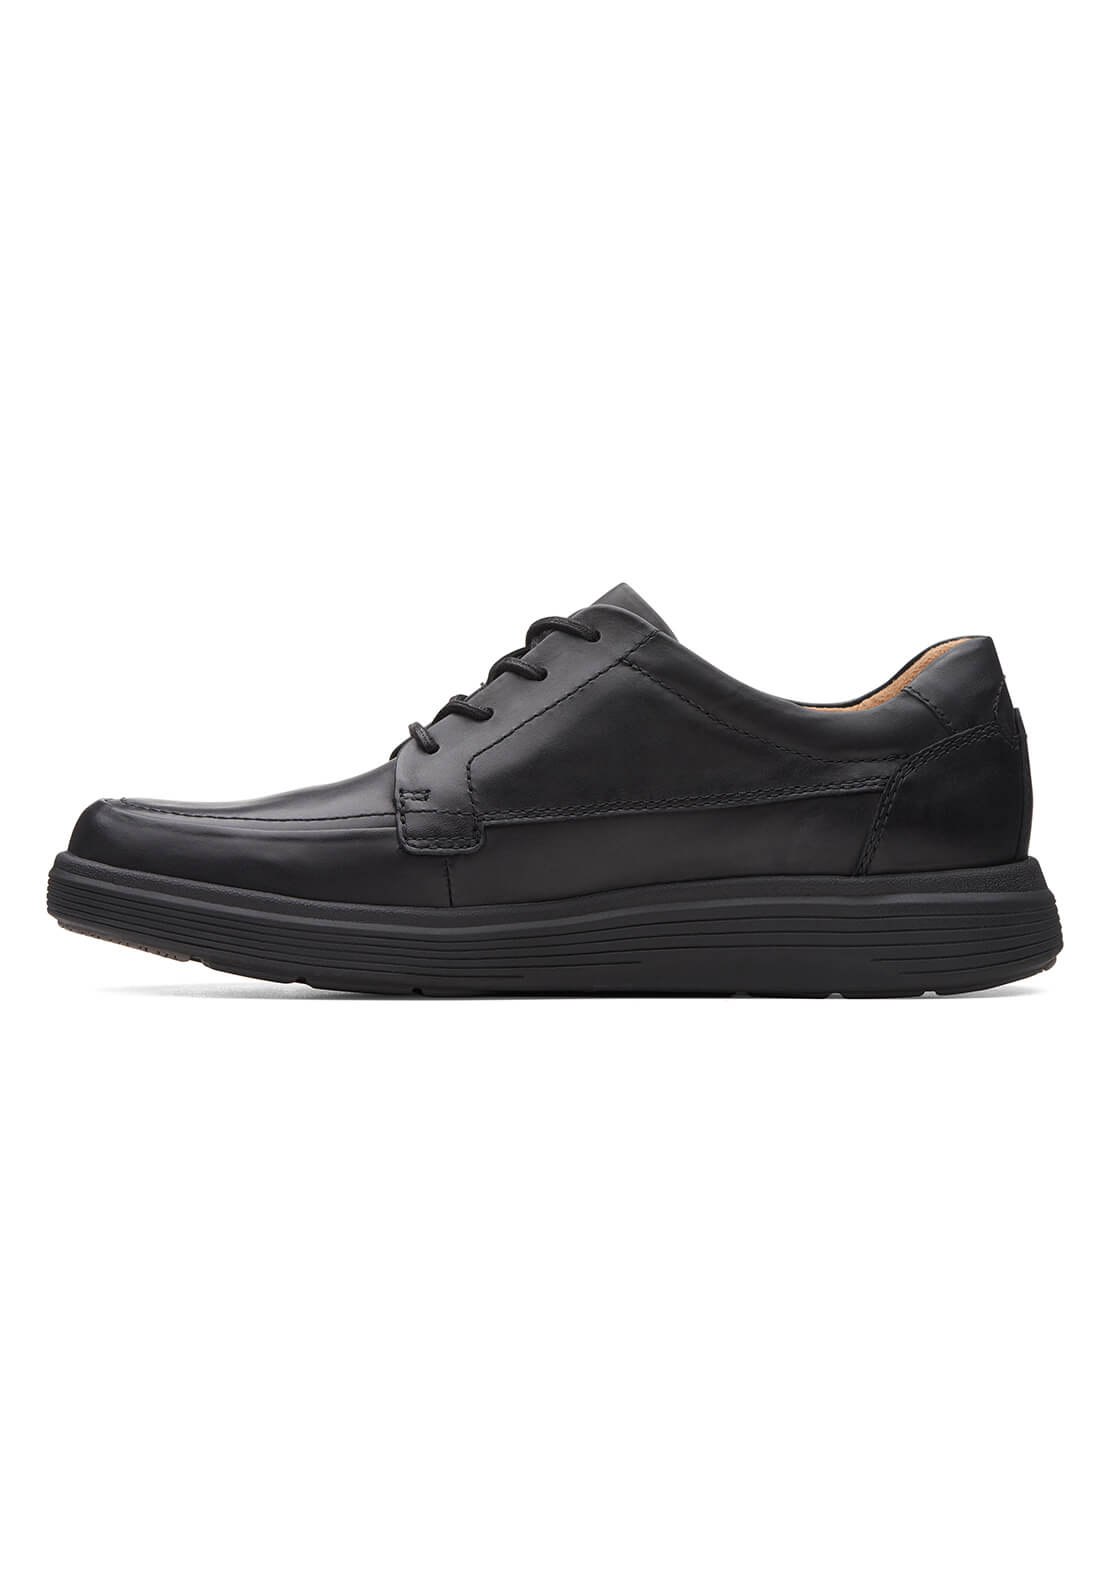 Clarks Un Abode Ease Casual Shoe - Black 3 Shaws Department Stores